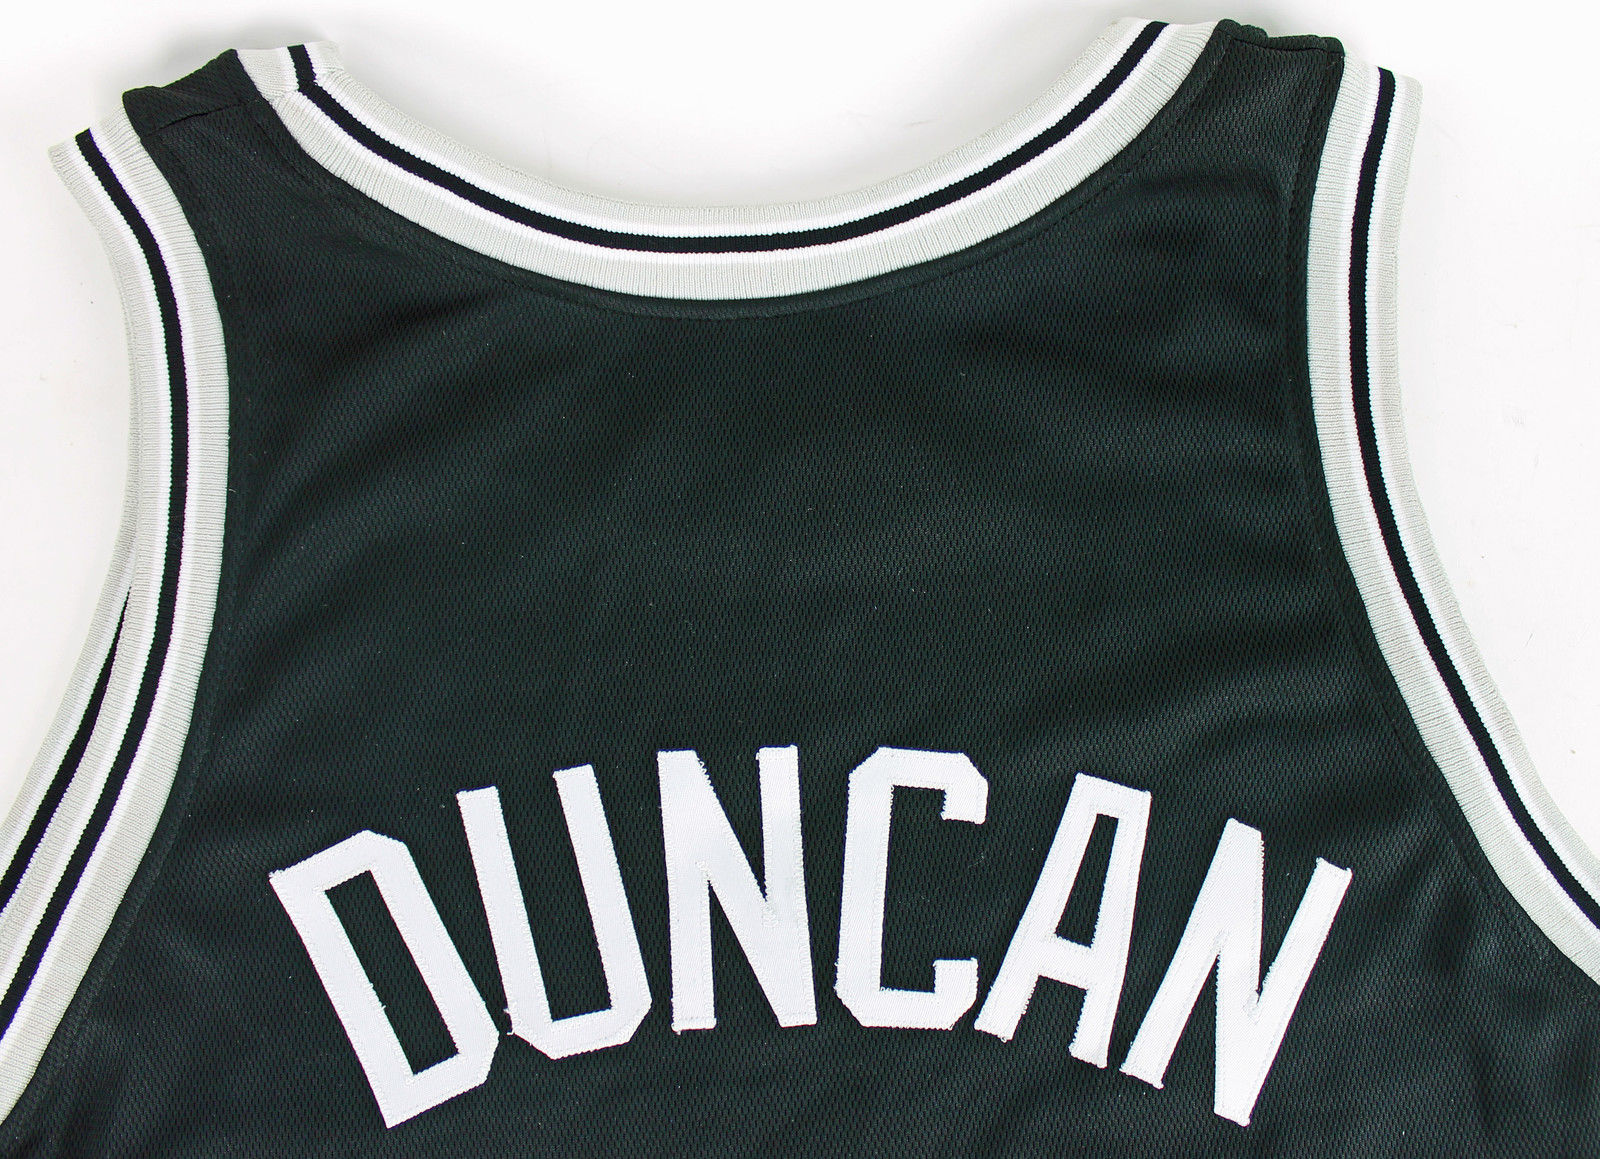 2000 Tim Duncan Team USA Game Used Basketball Jersey - MEARS LOA